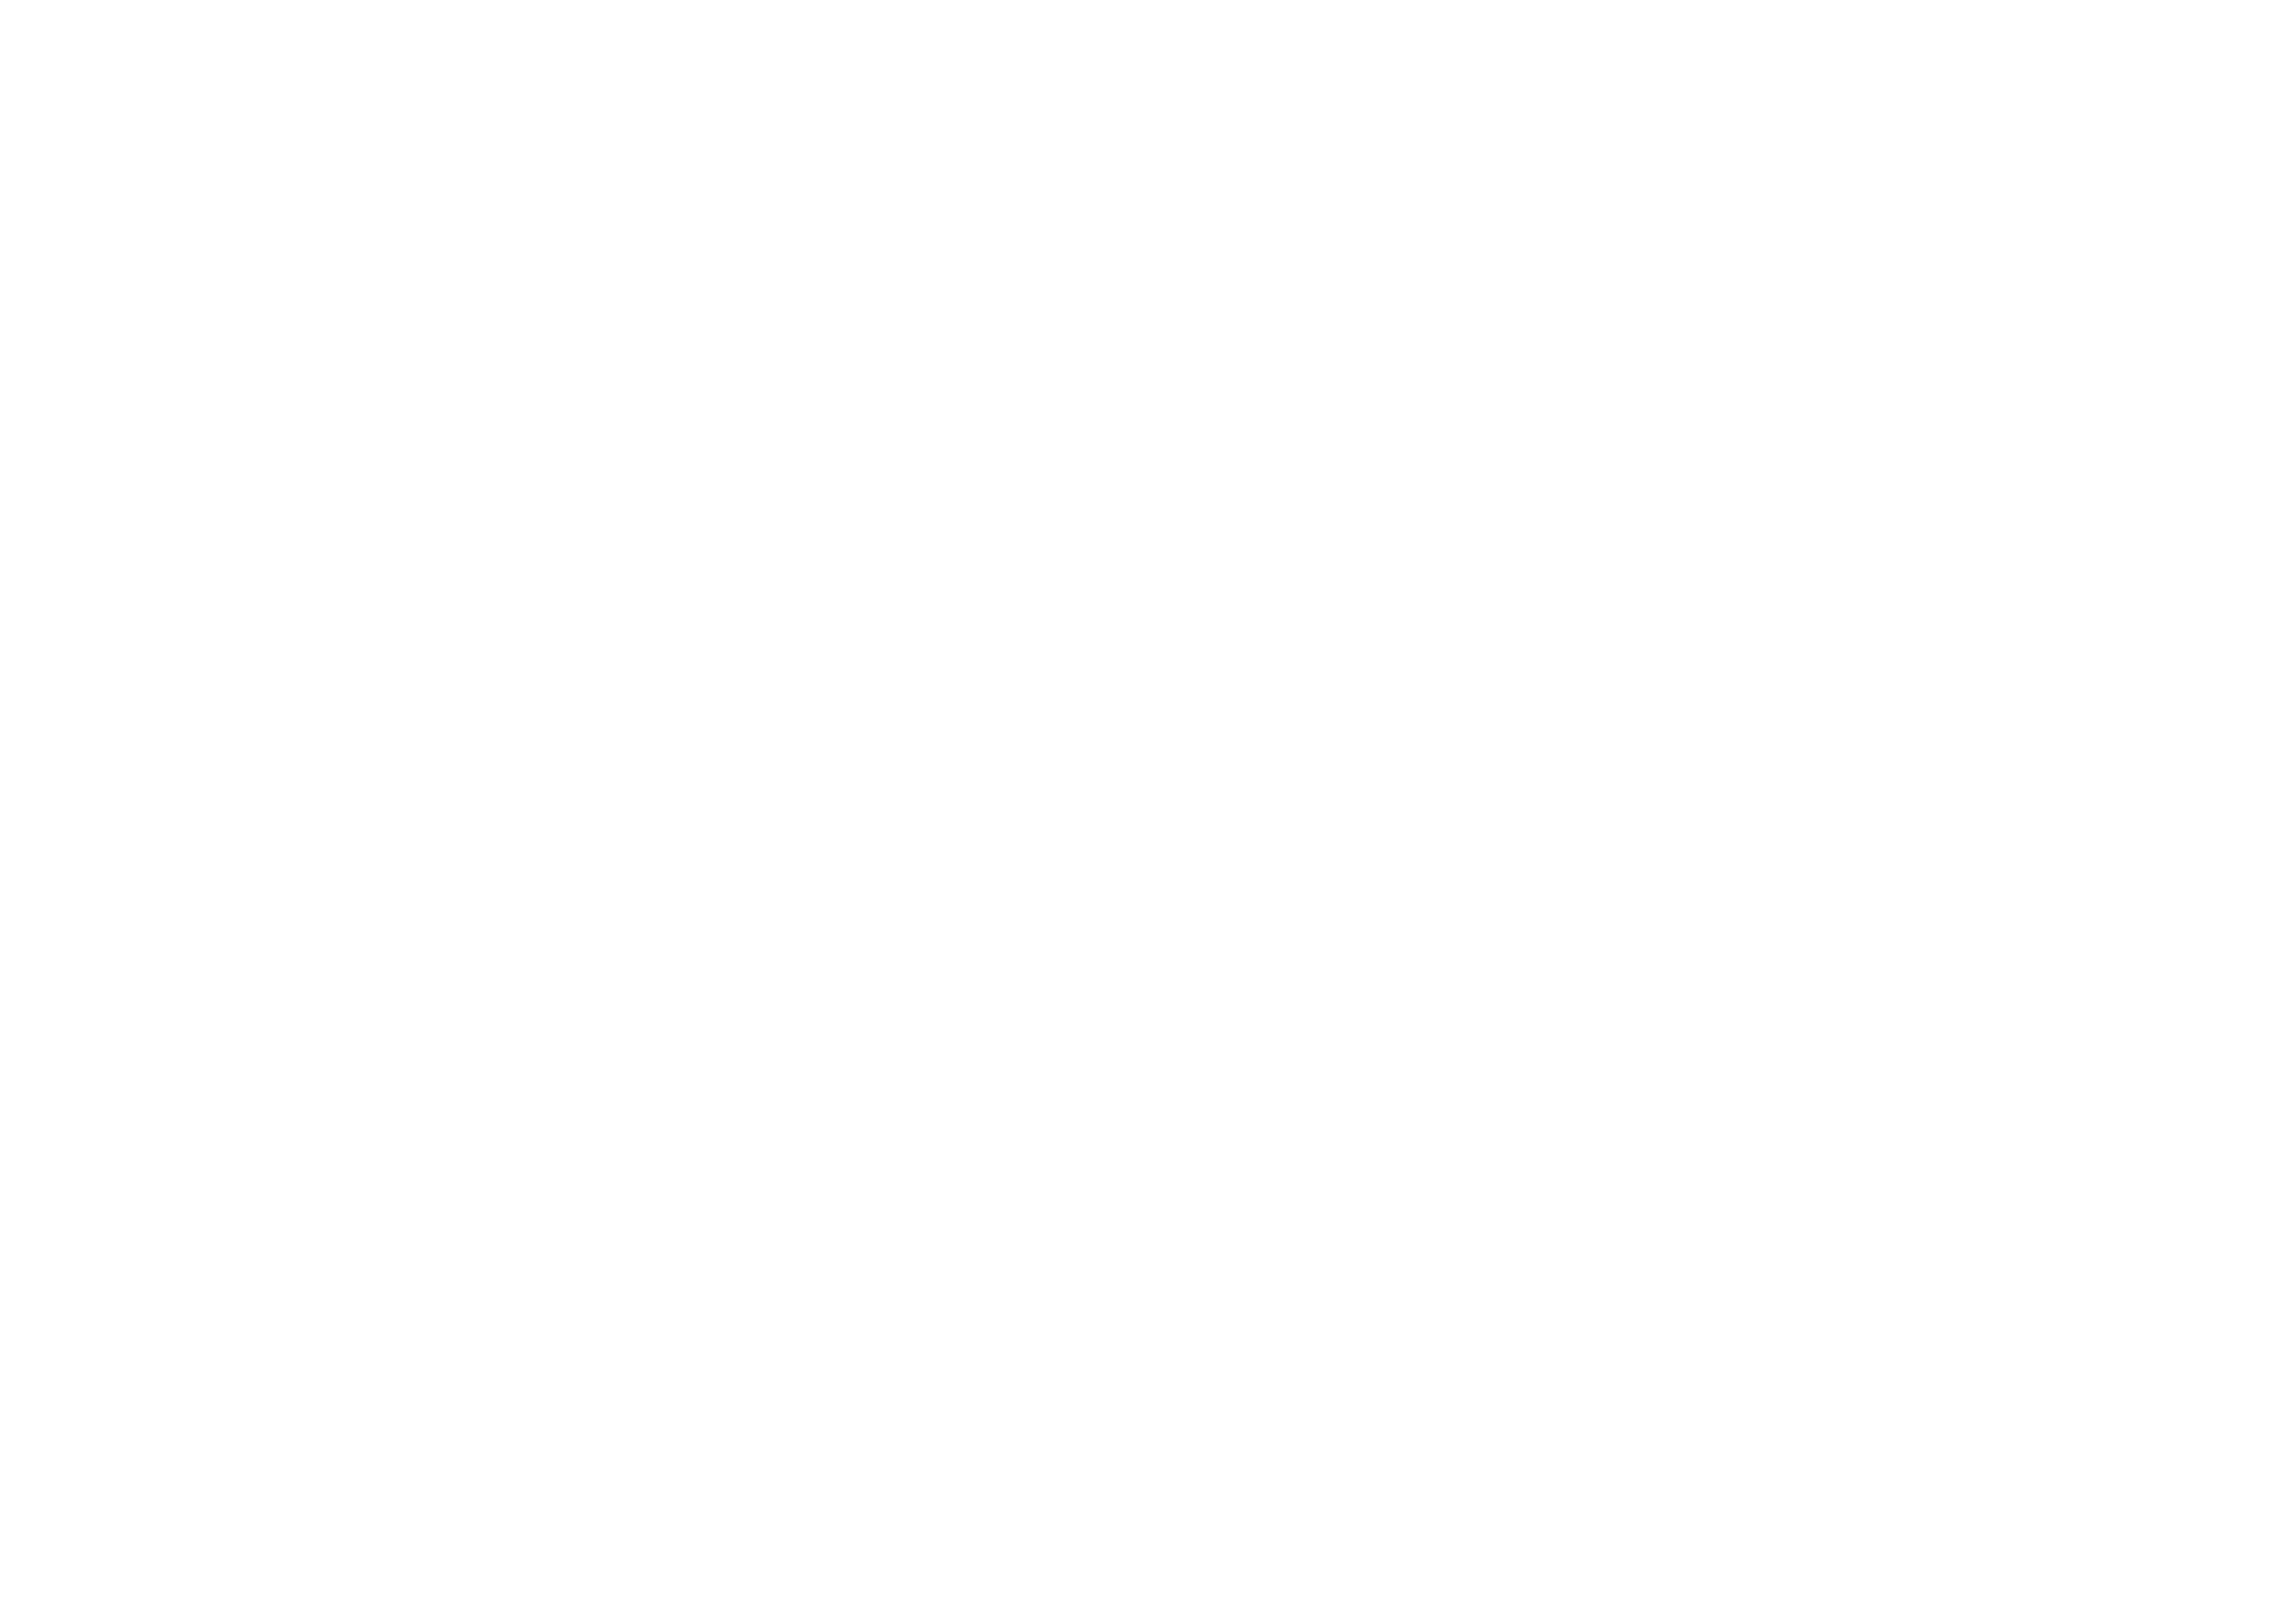 Pillette Village BIA